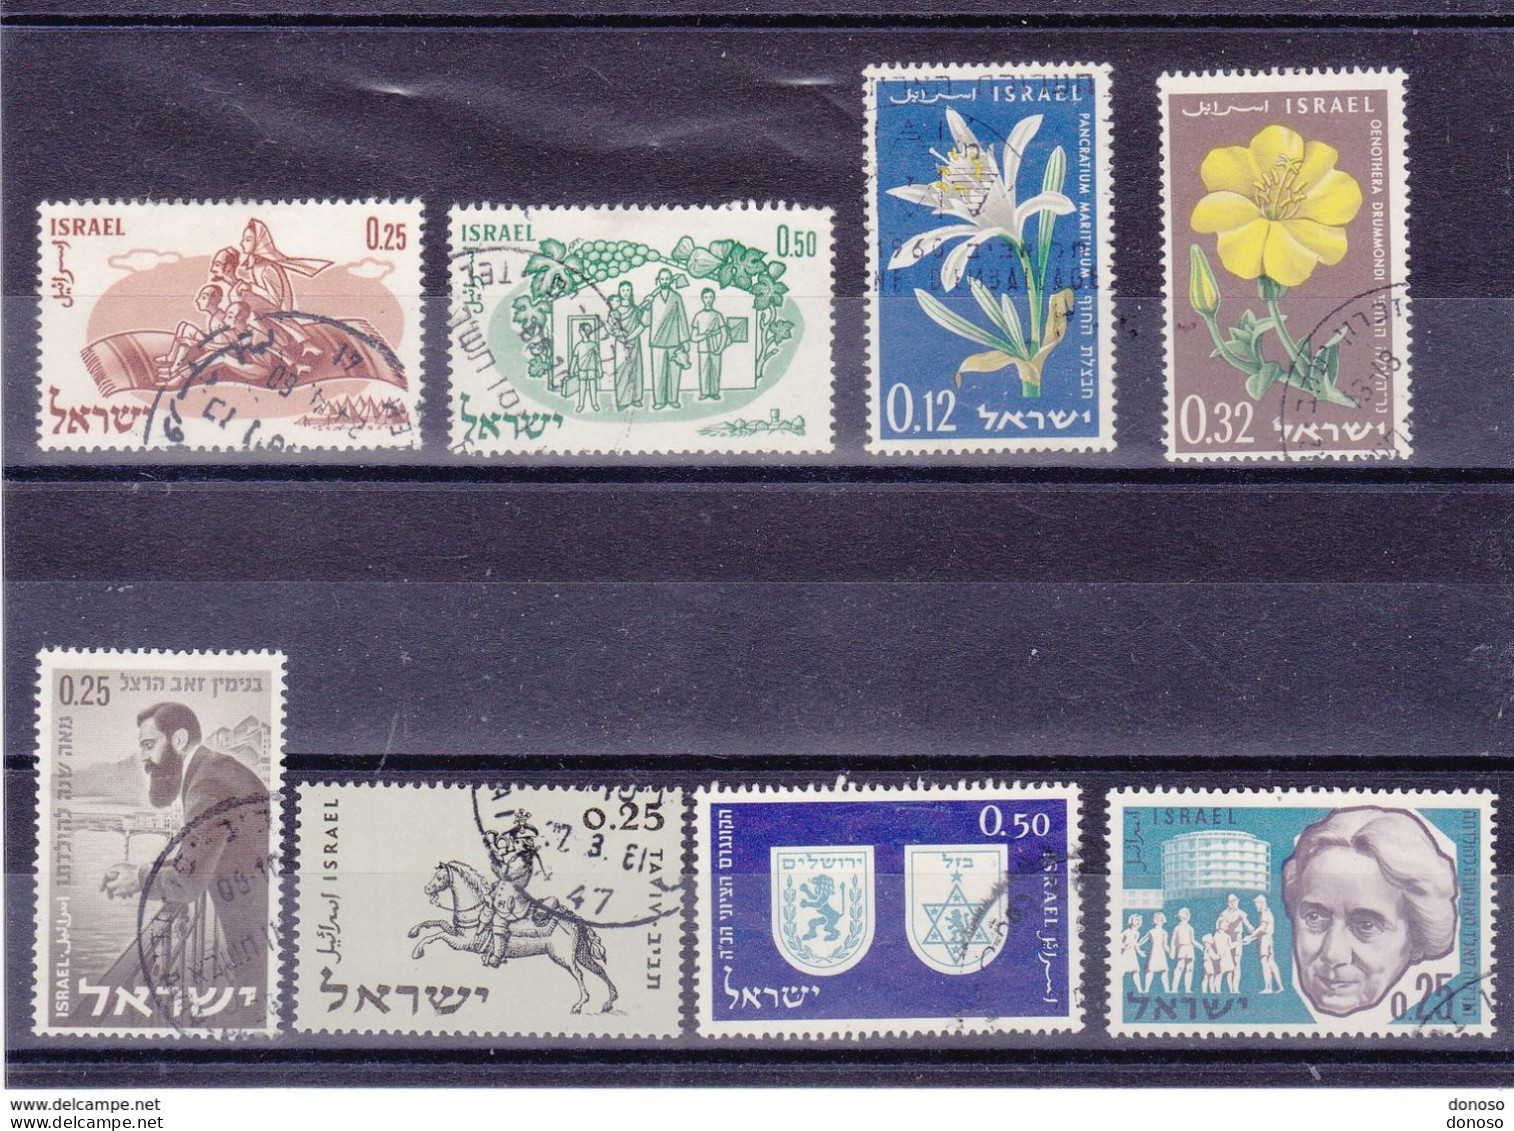 ISRAËL 1962  Yvert 211-214 + 220-223 + 230 Oblitéré Cote 3,15 Euros - Usados (sin Tab)